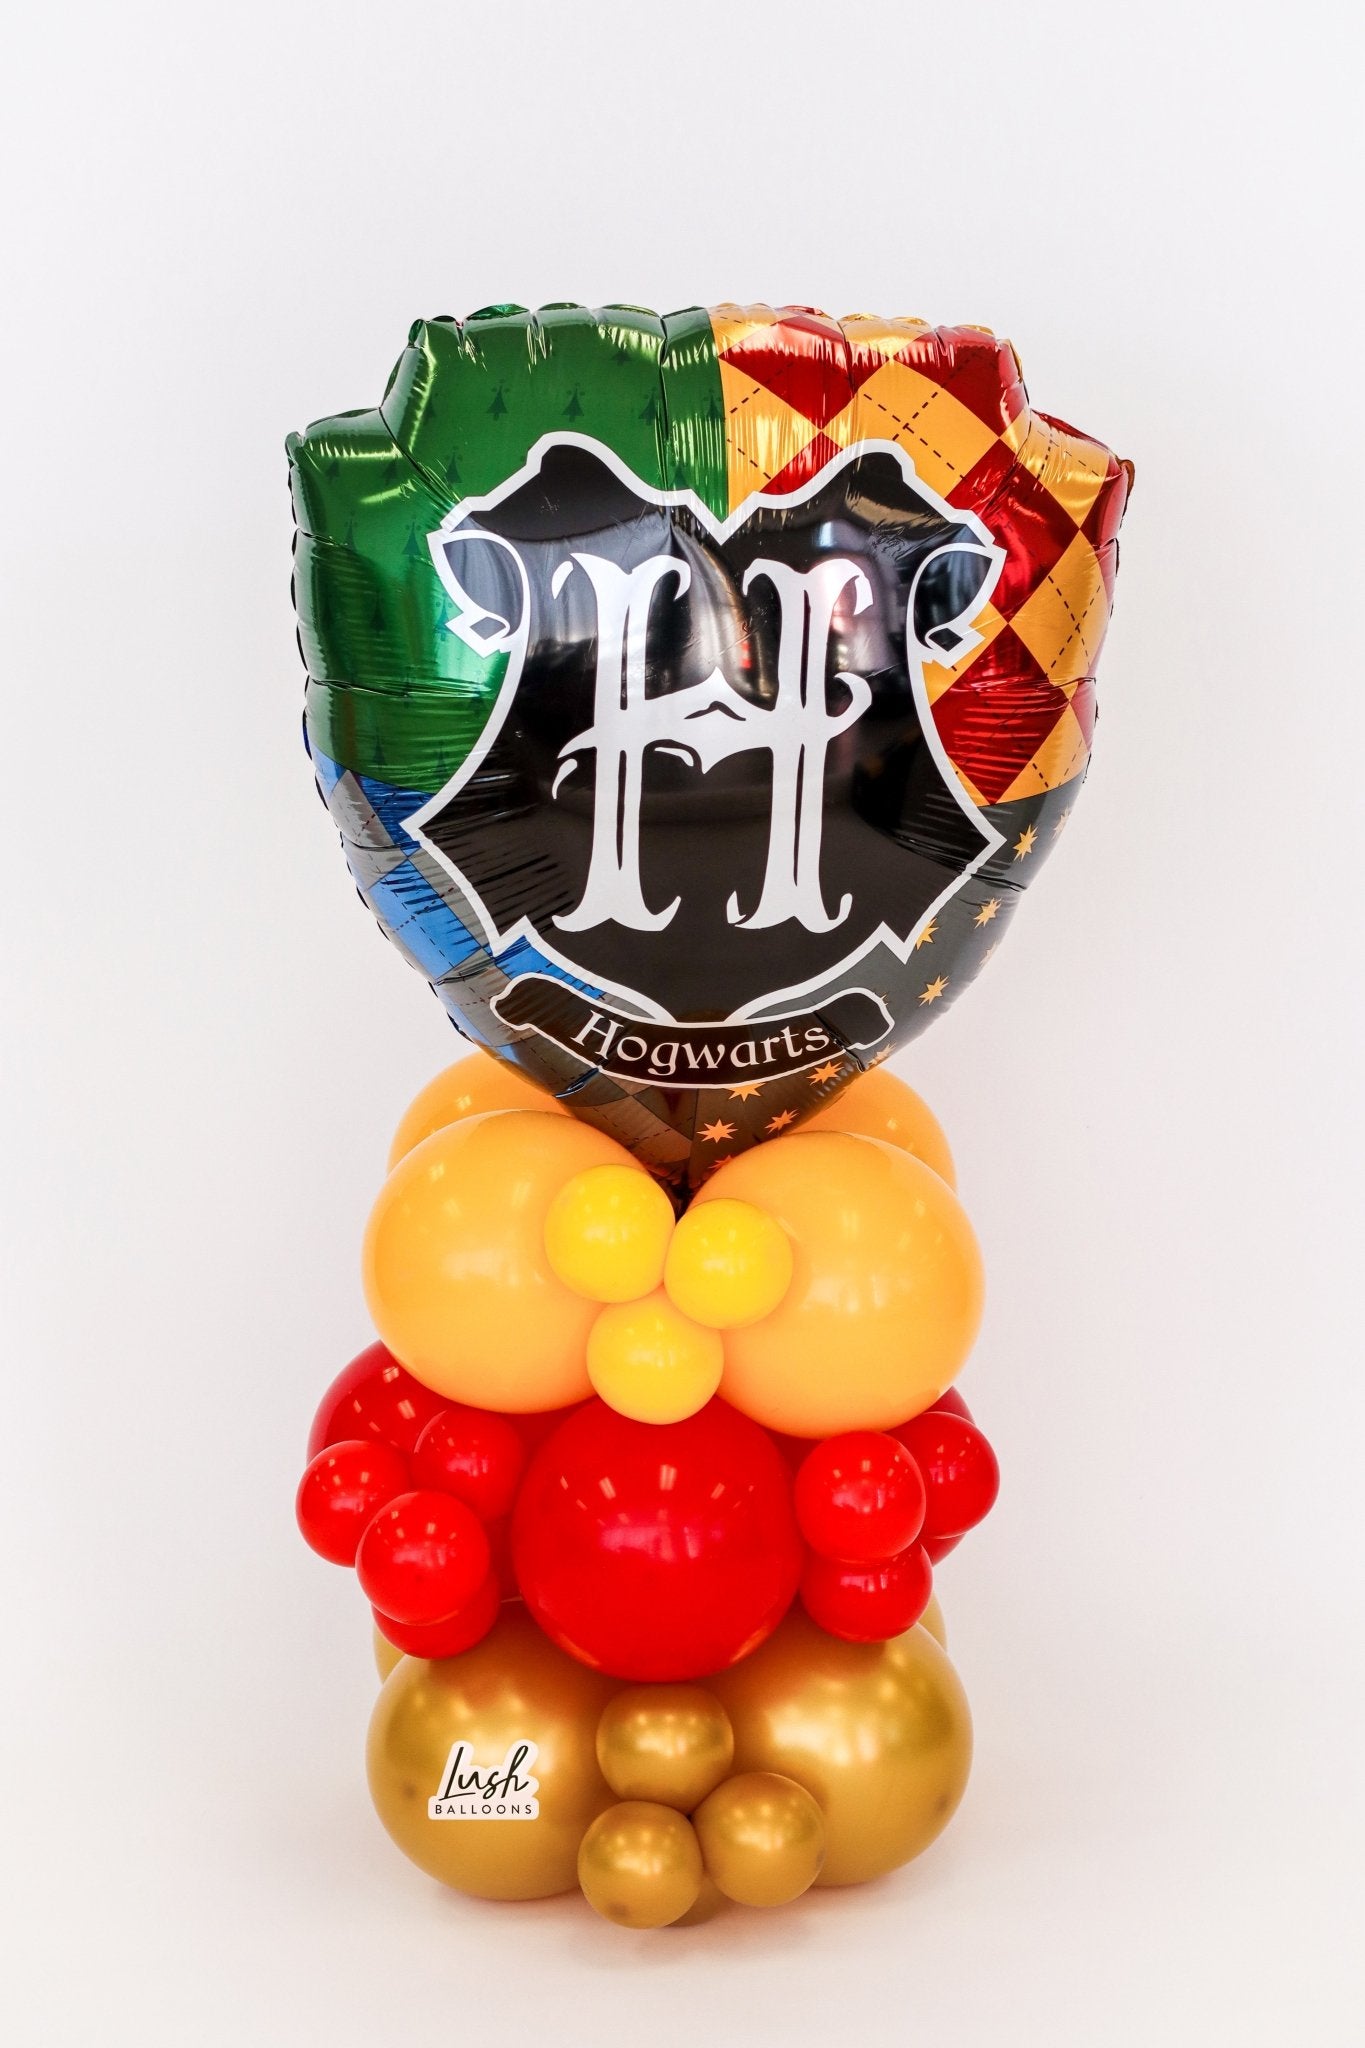 Hogwarts (Harry Potter) Bouquet - Lush Balloons